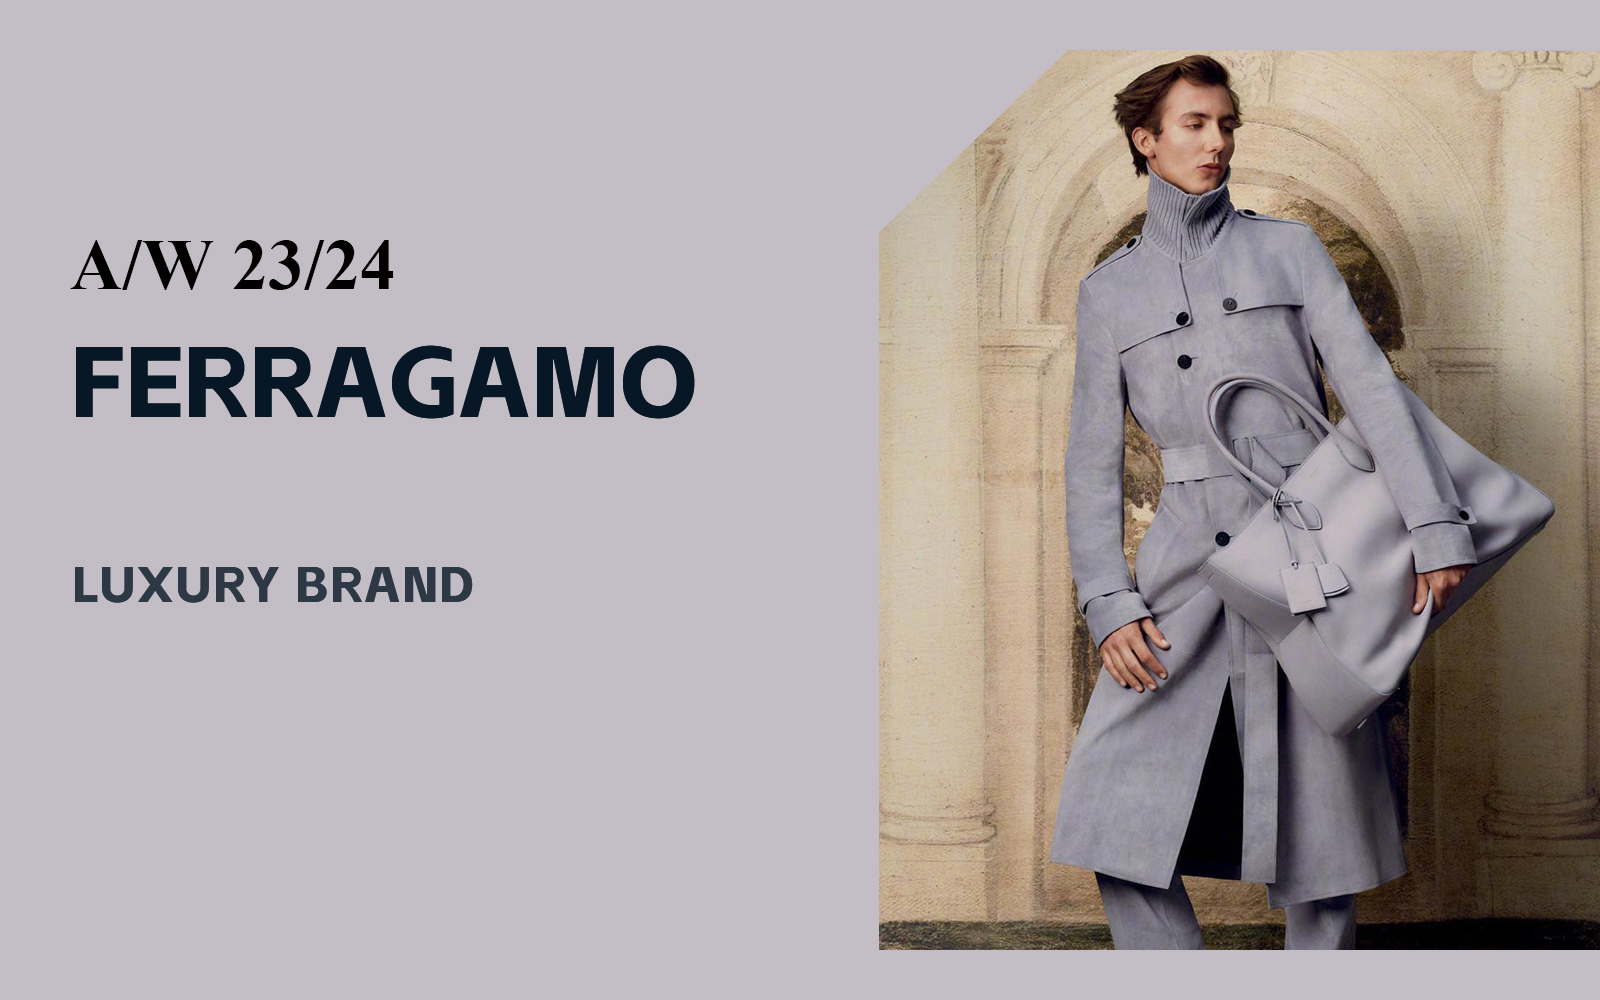 Renaissance -- The Analysis of Ferragamo The Luxury Menswear Brand